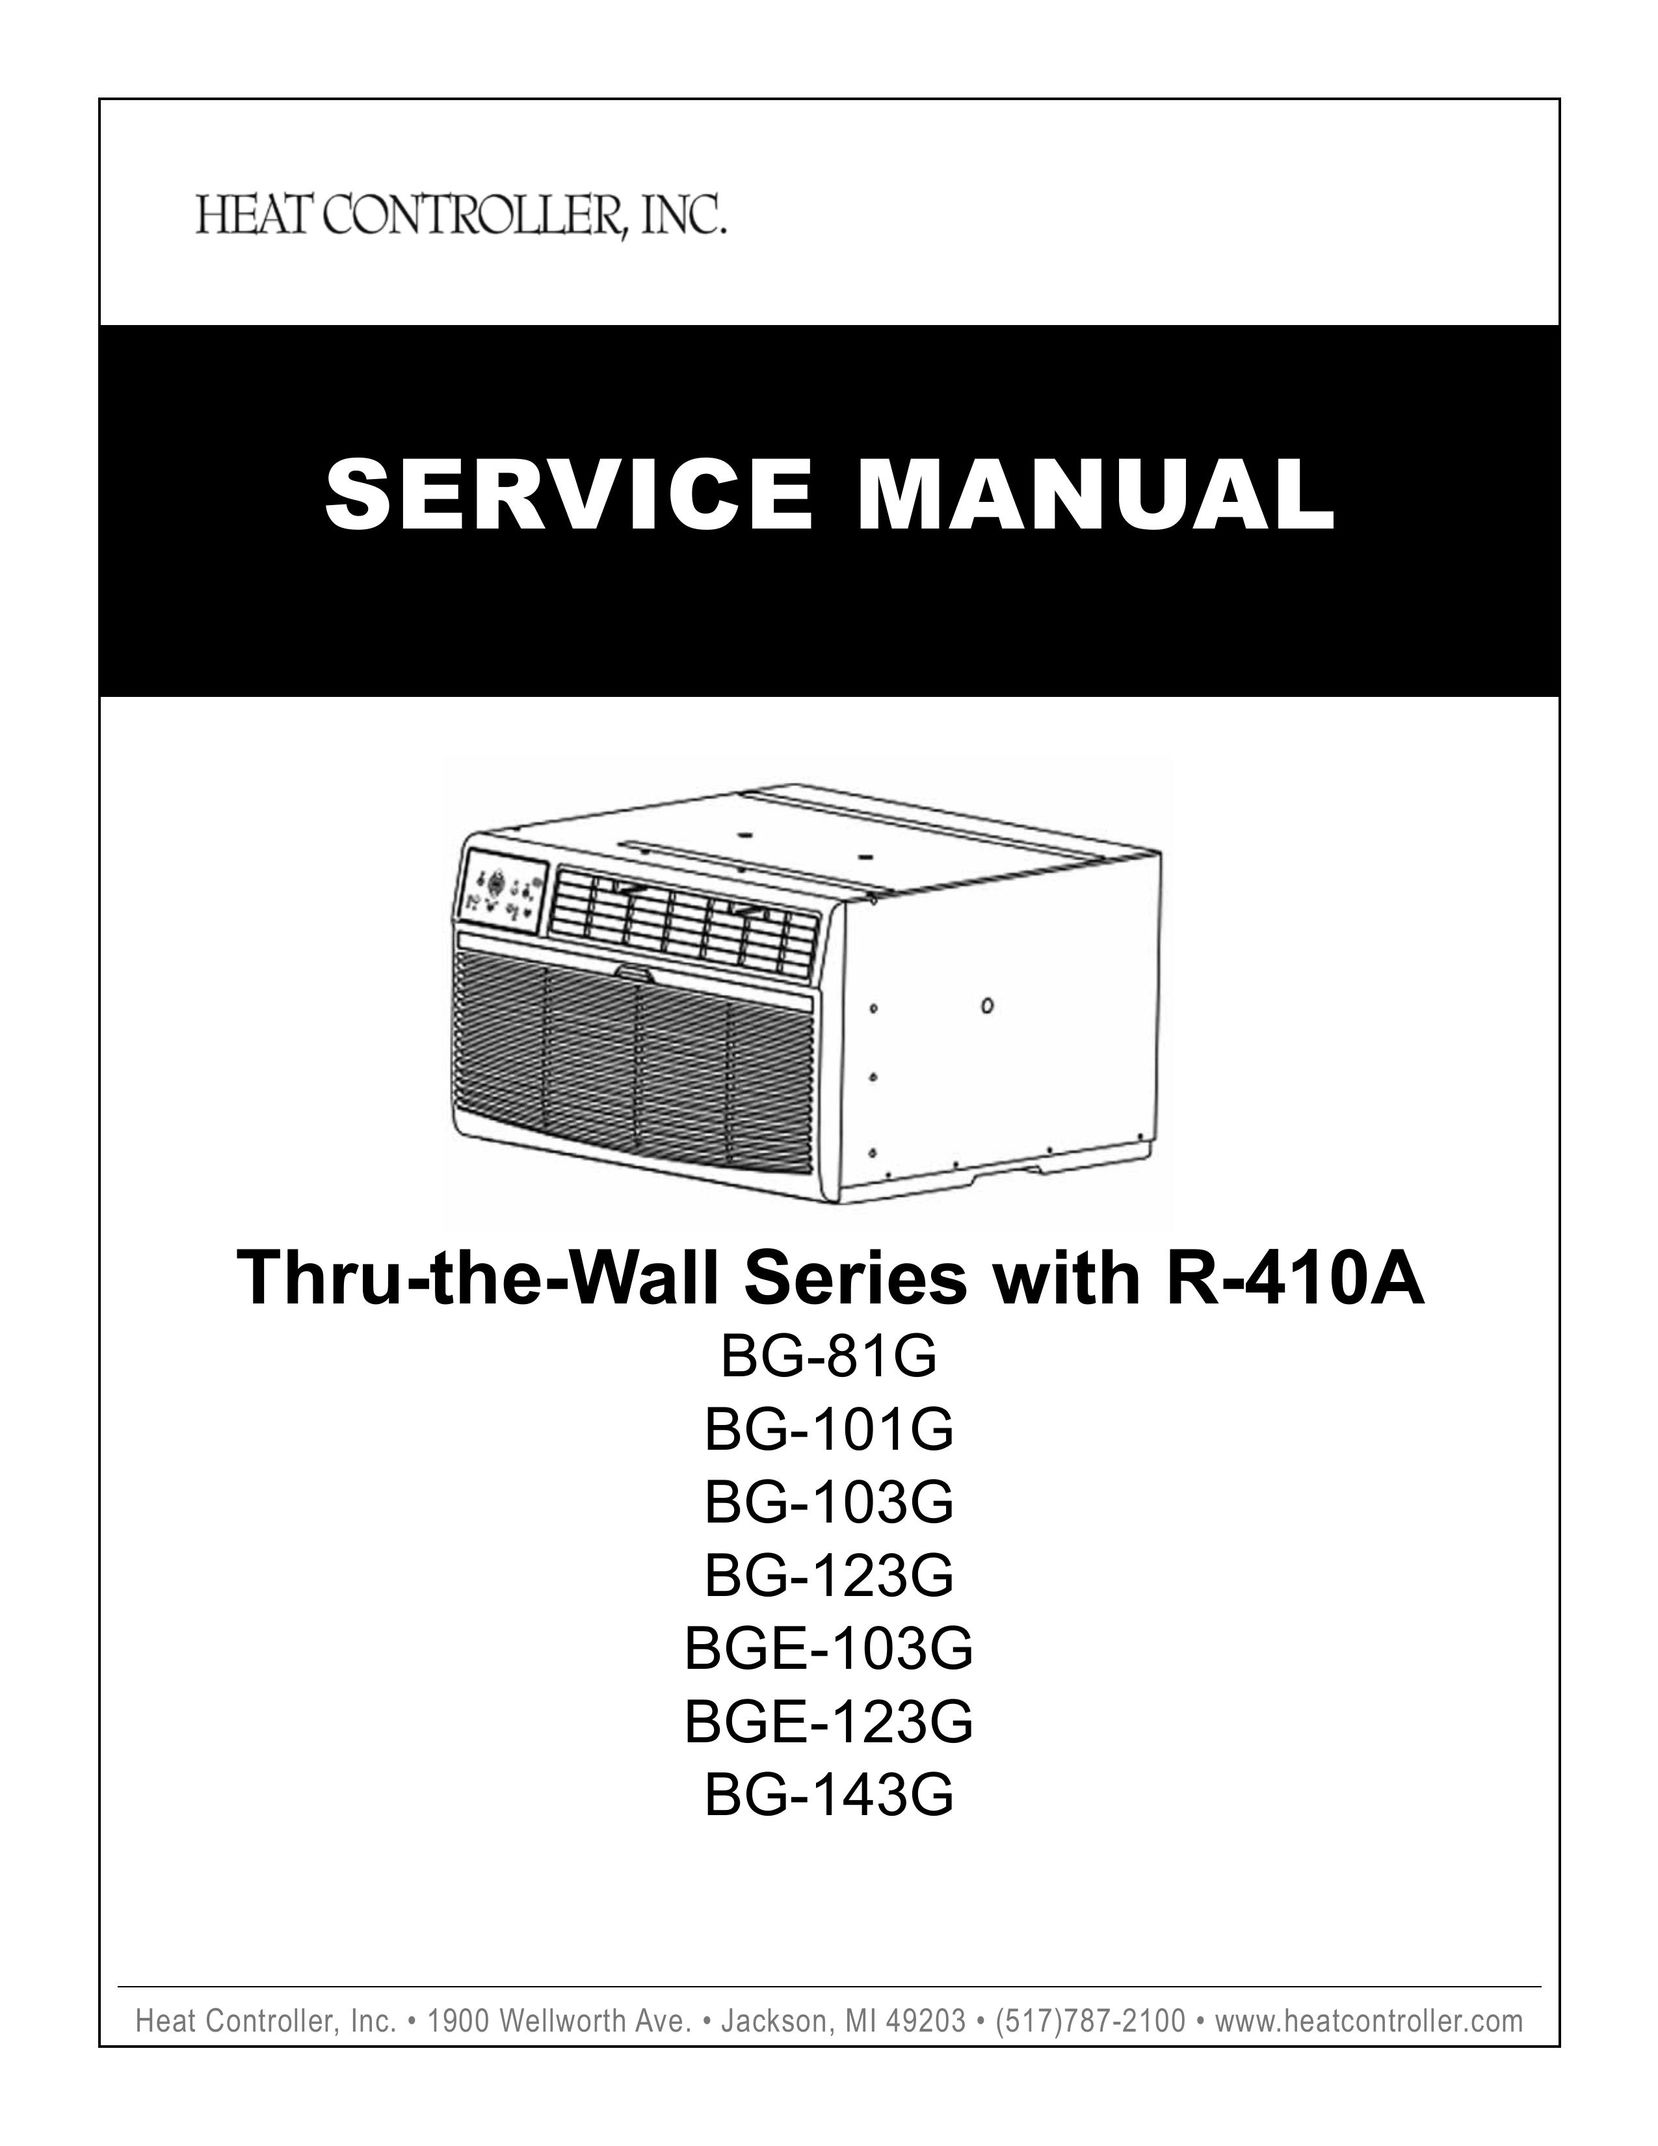 Heat Controller BG-143G Air Conditioner User Manual